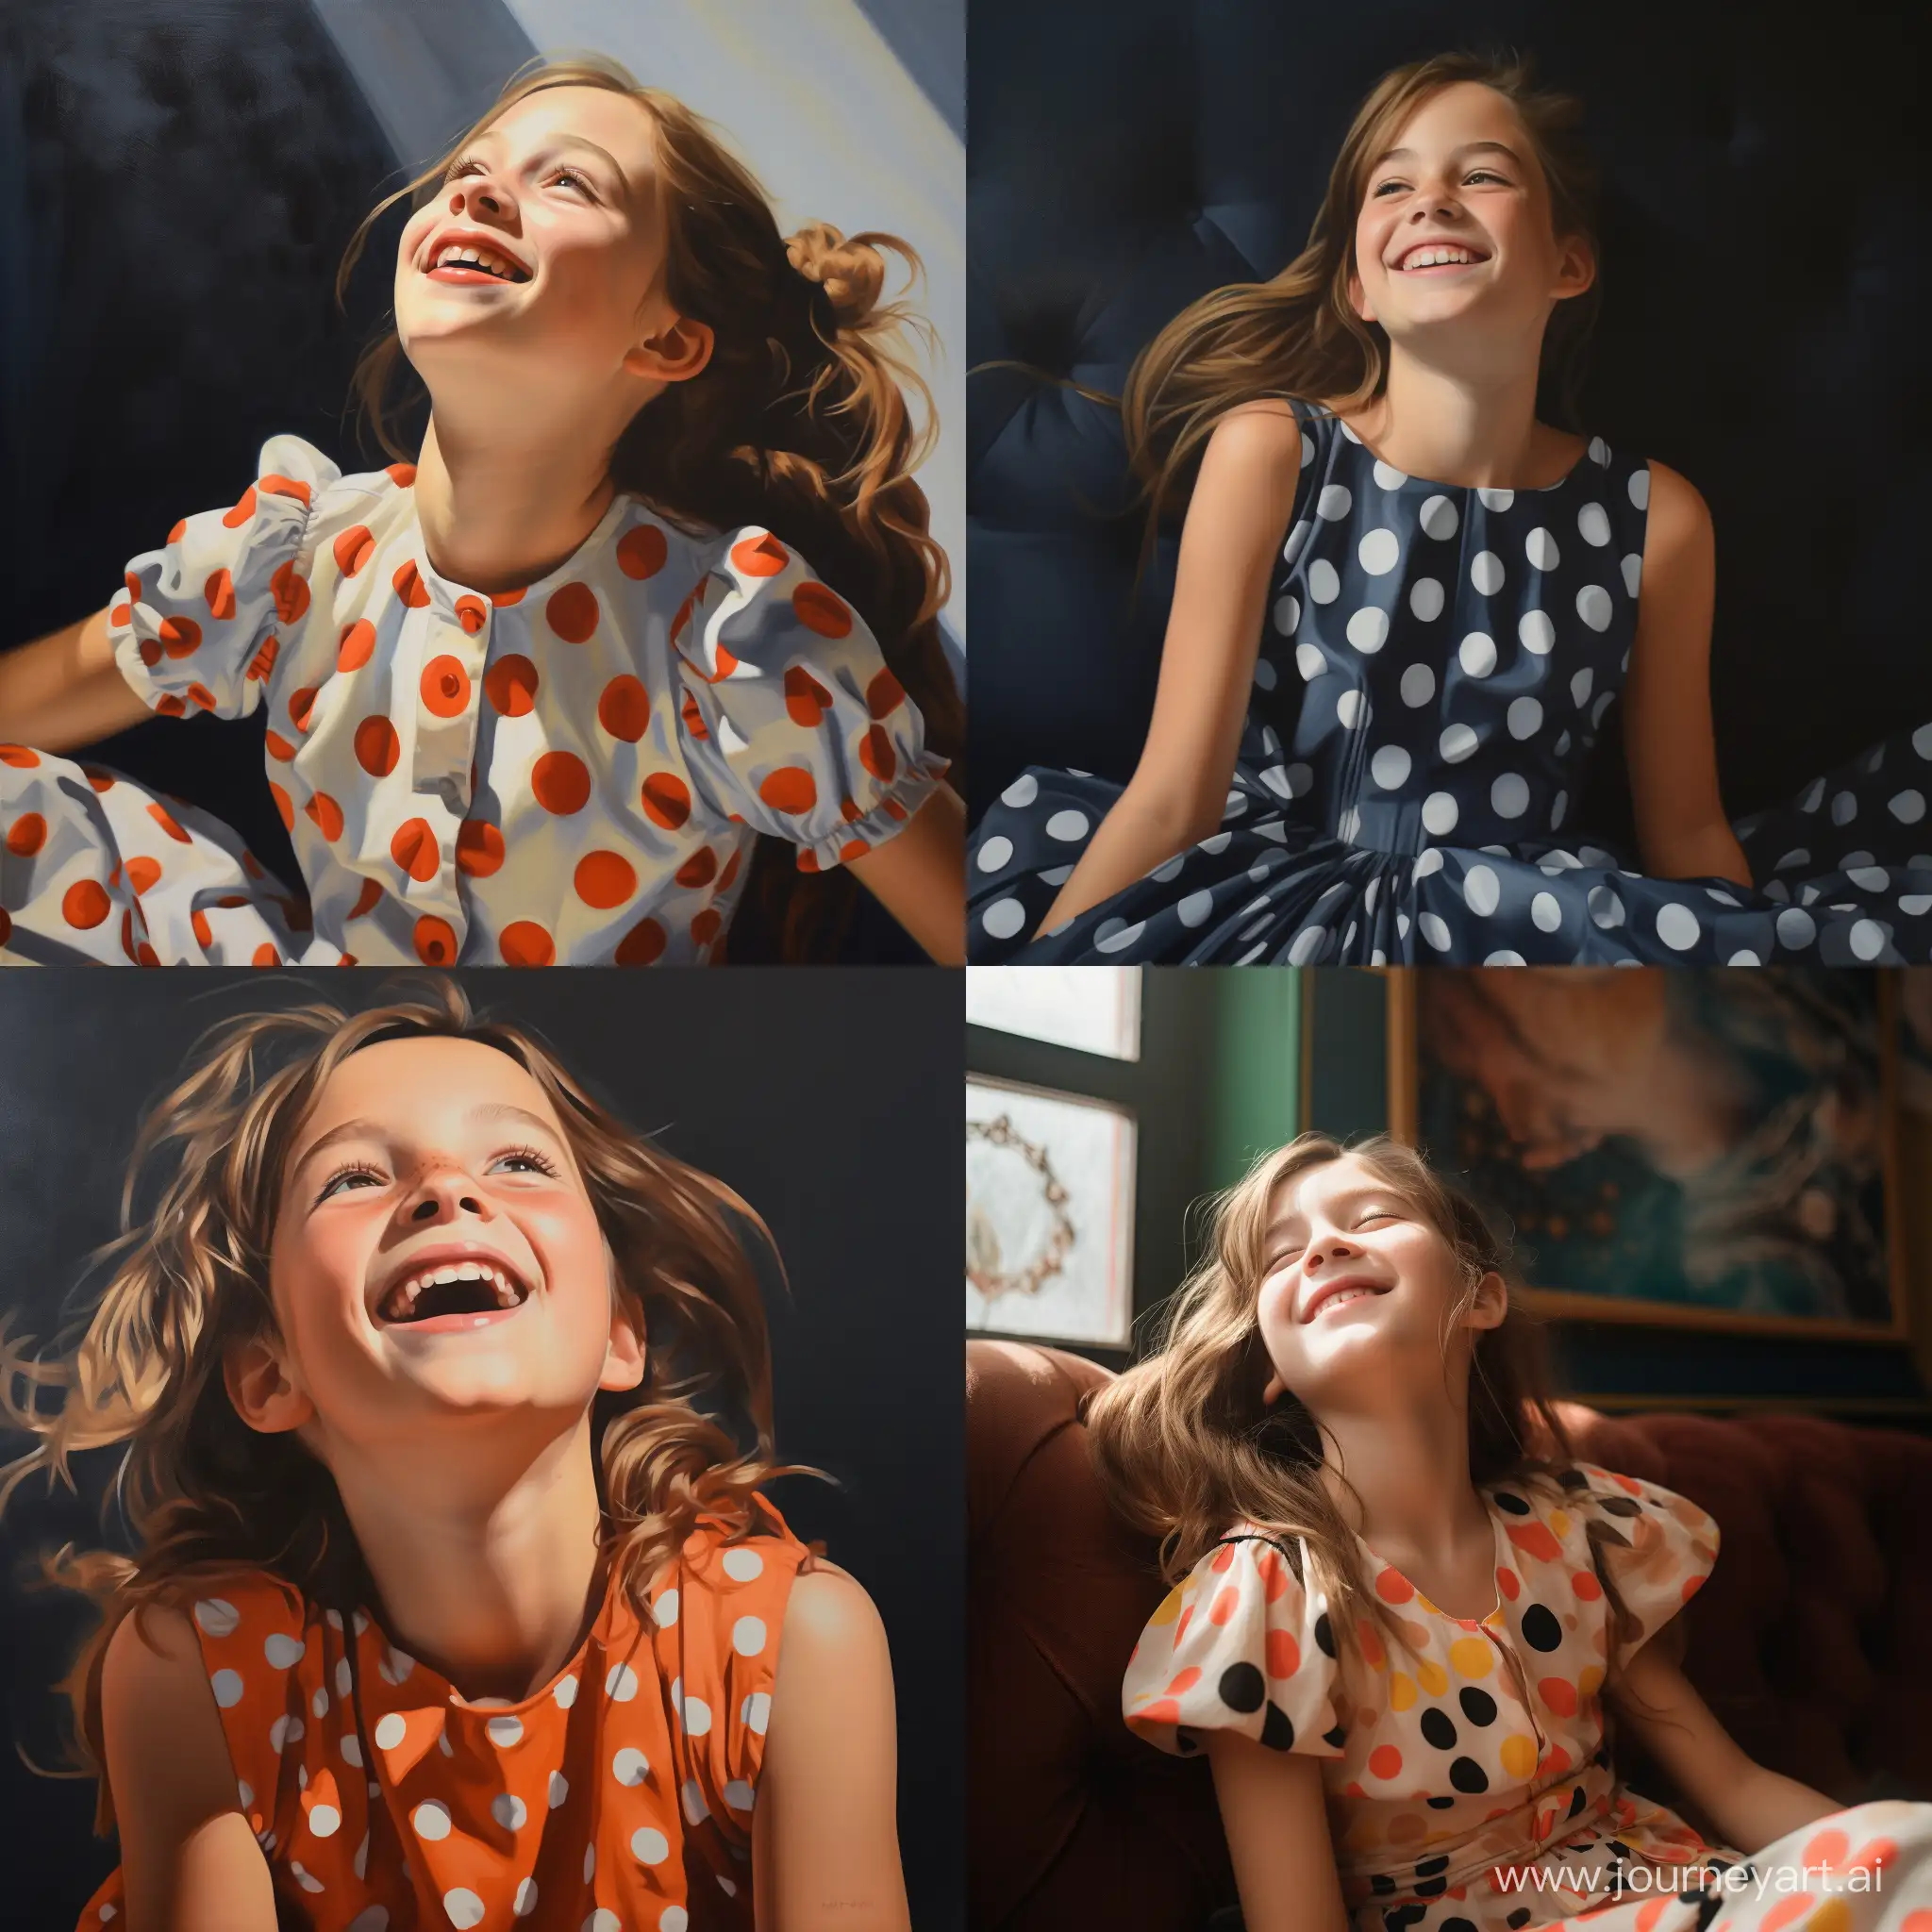 Joyful-TenYearOld-Girl-in-Polka-Dot-Dress